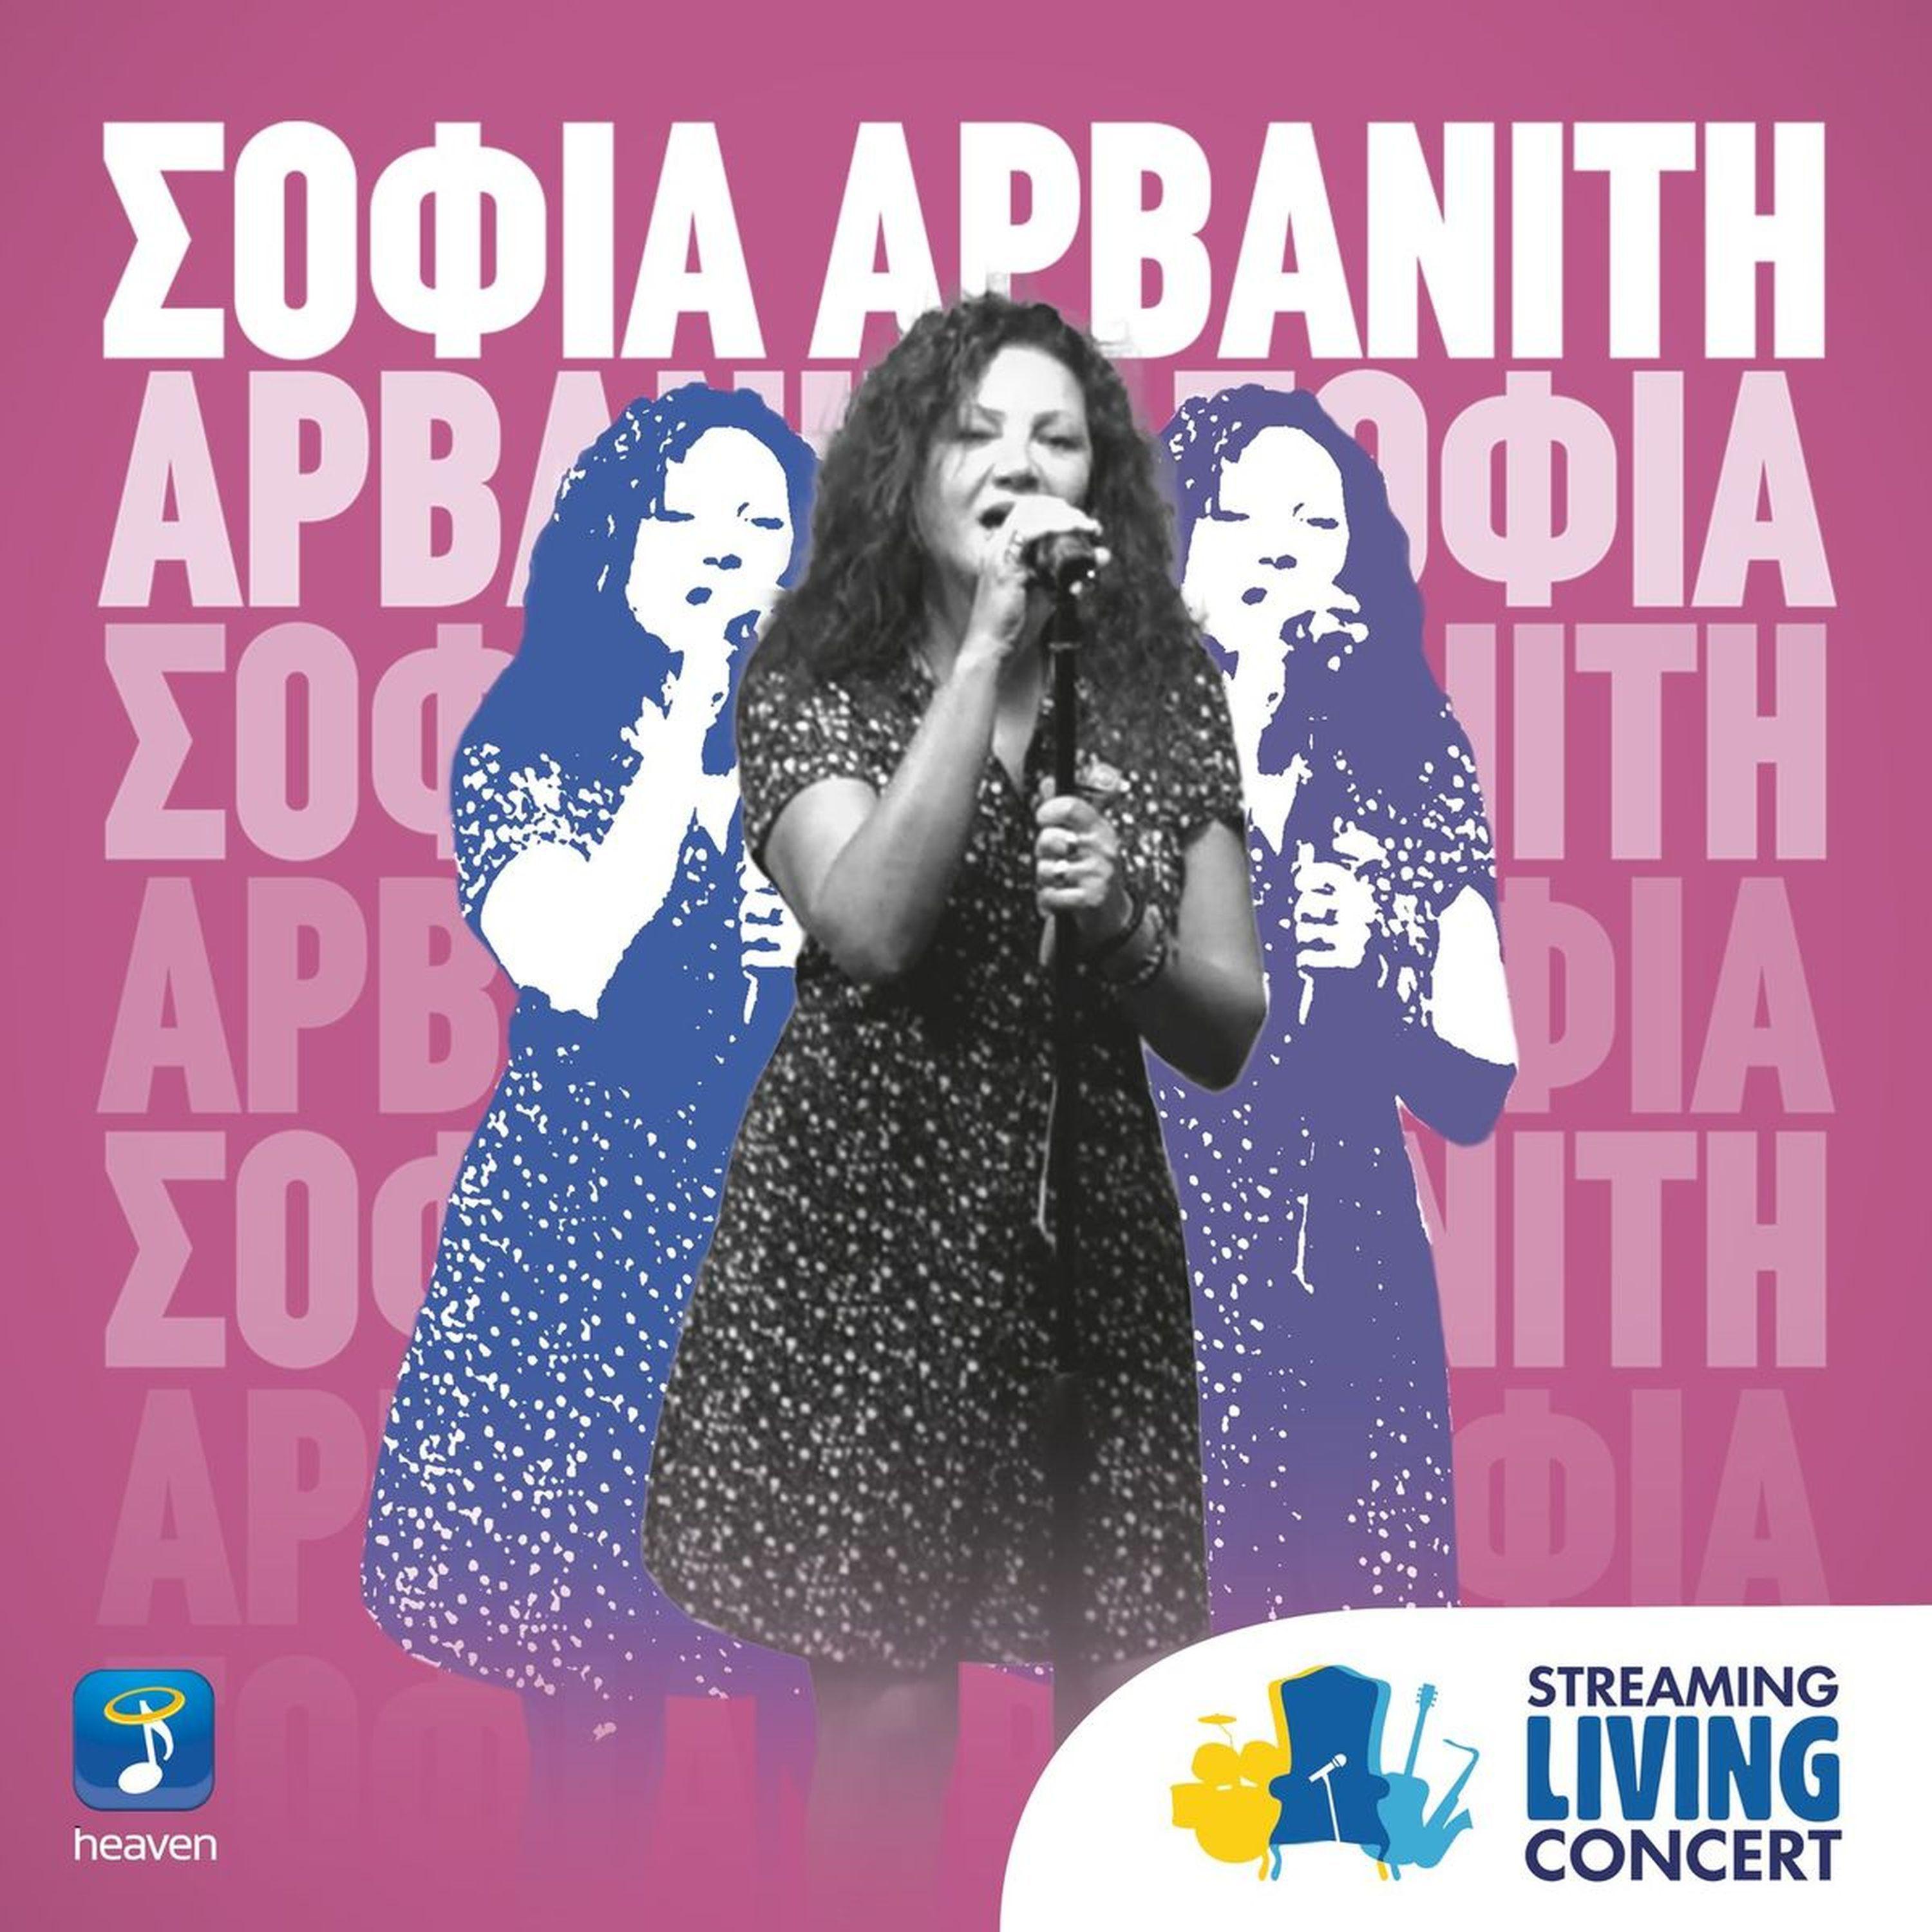 Sofia Arvaniti - Kokkini Kolasi (Streaming Living Concert)